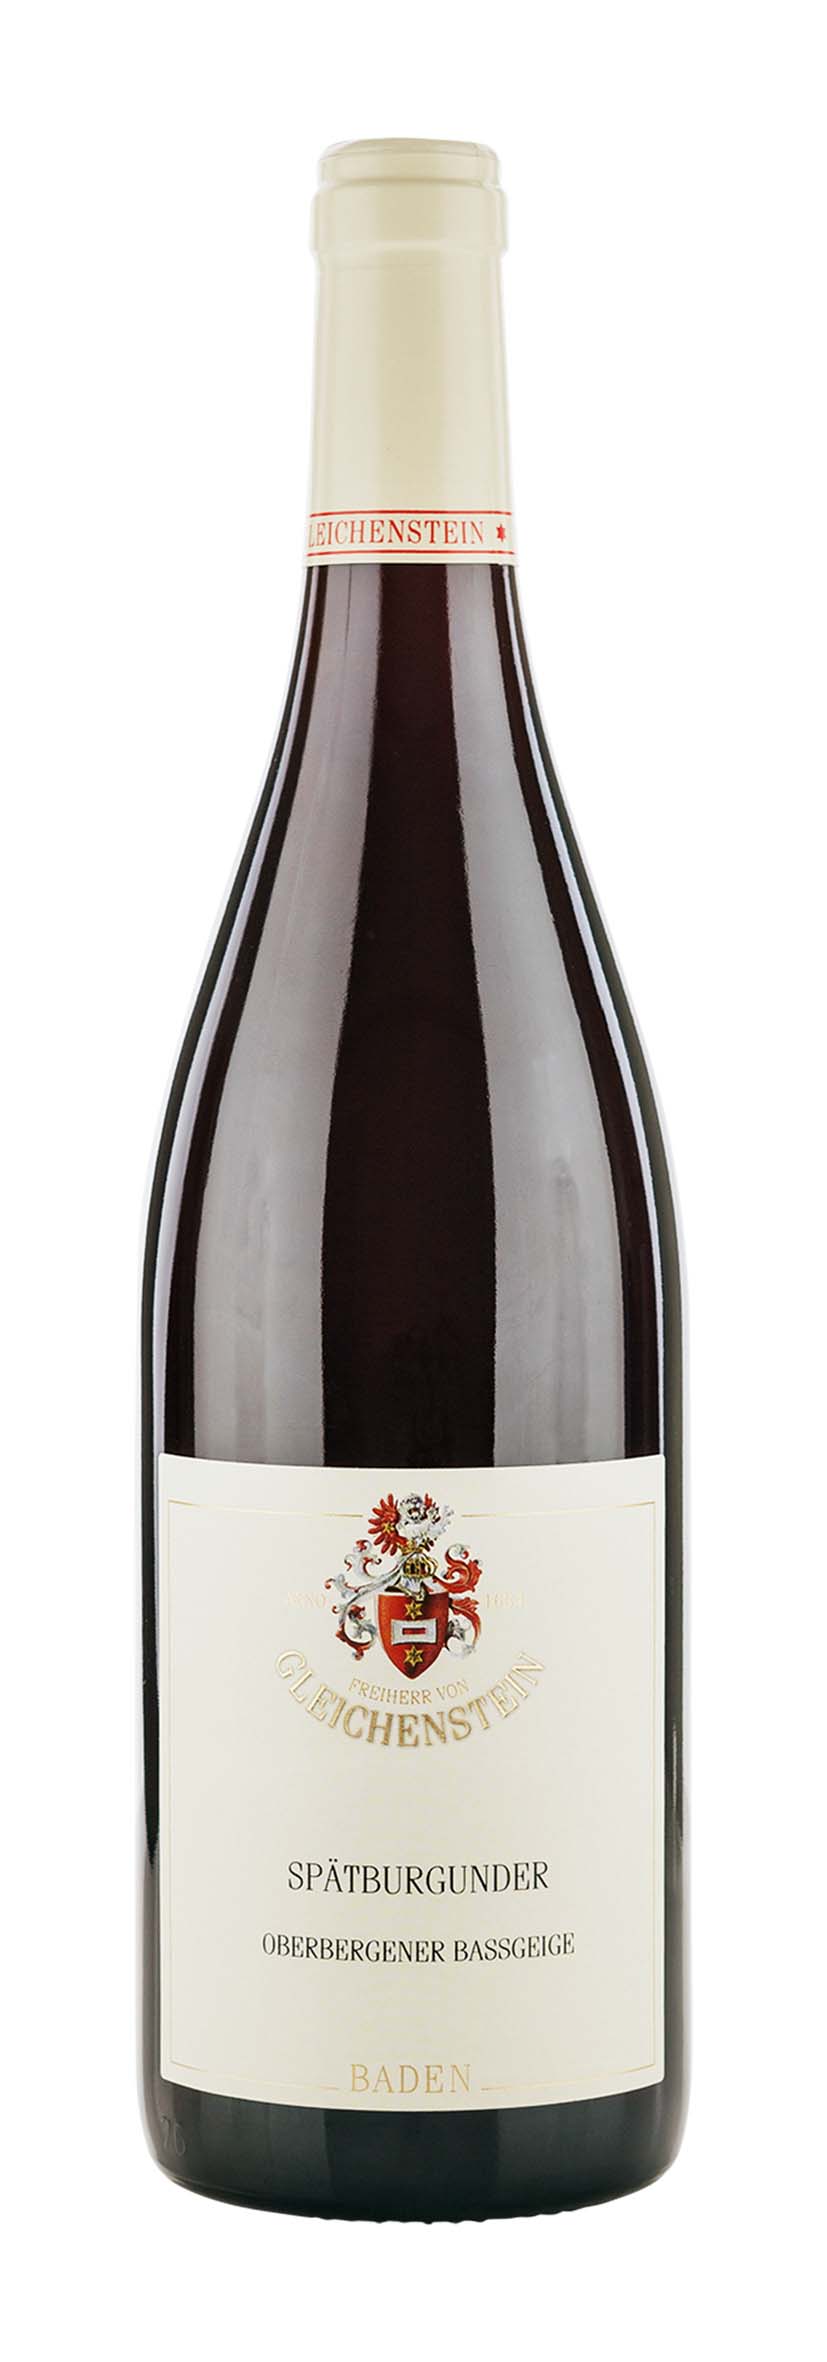 Oberbergener Bassgeige Pinot Noir 2011